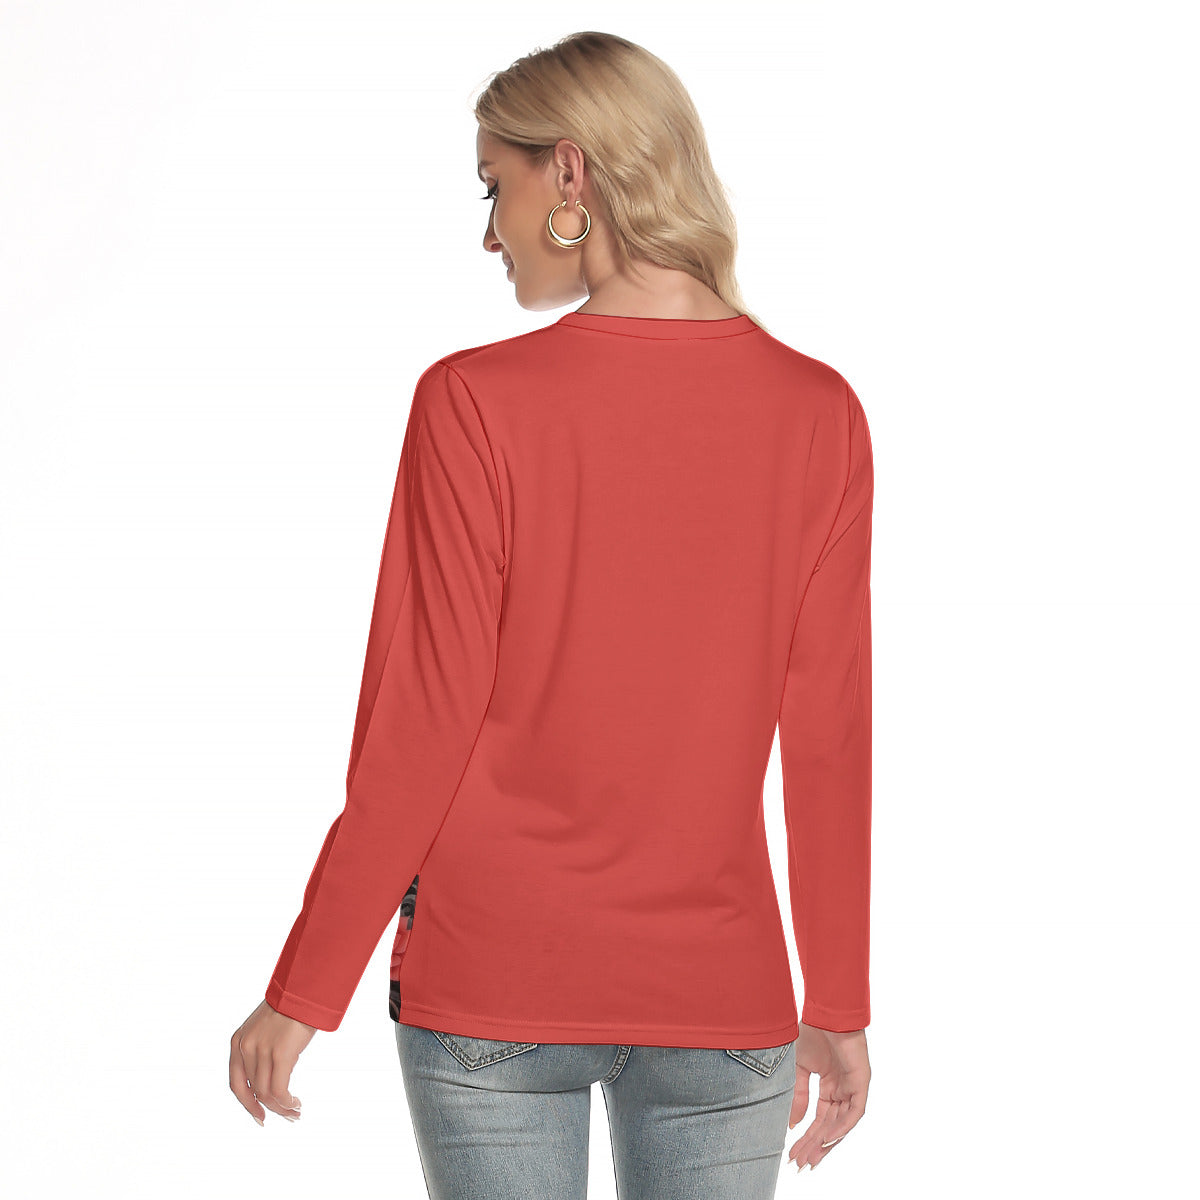 Ming Fantasy 104 -- Women's O-neck Long Sleeve T-shirt